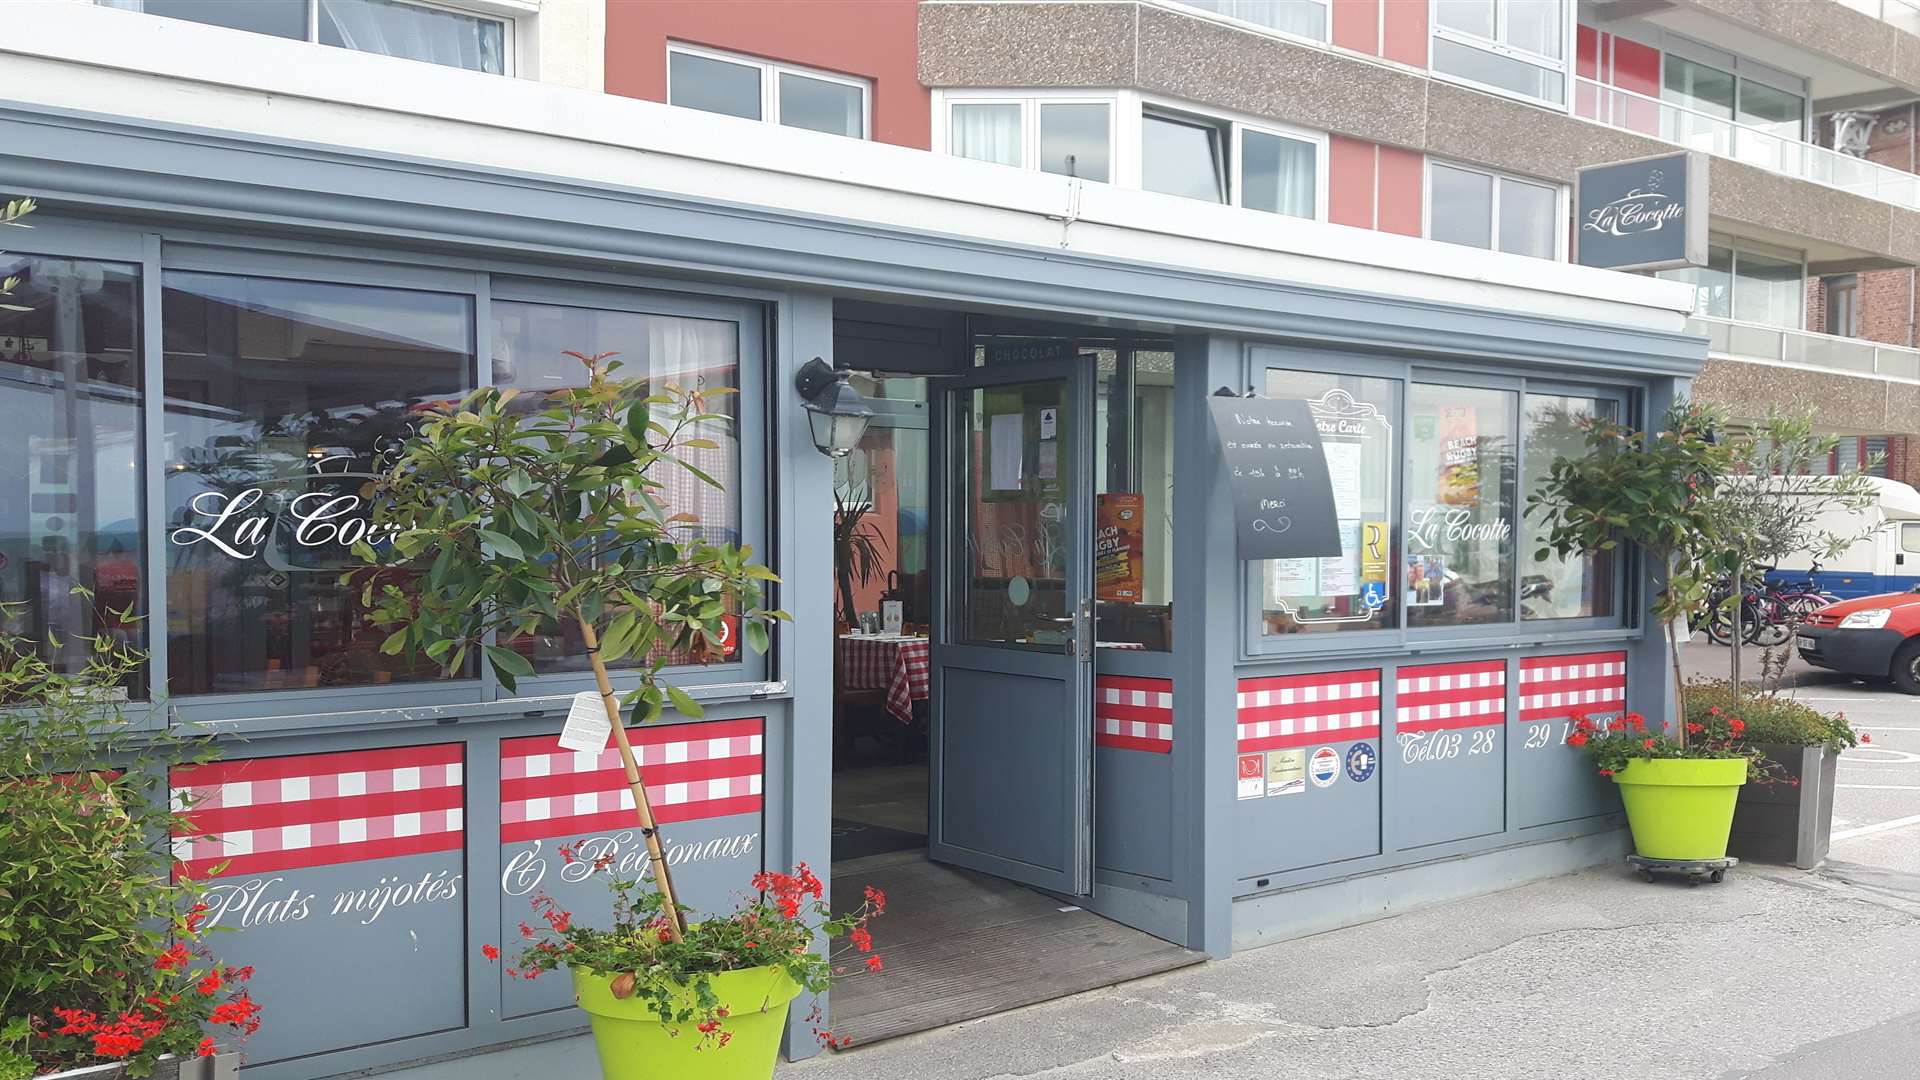 La Cocotte restaurant at Dunkirk seafront.